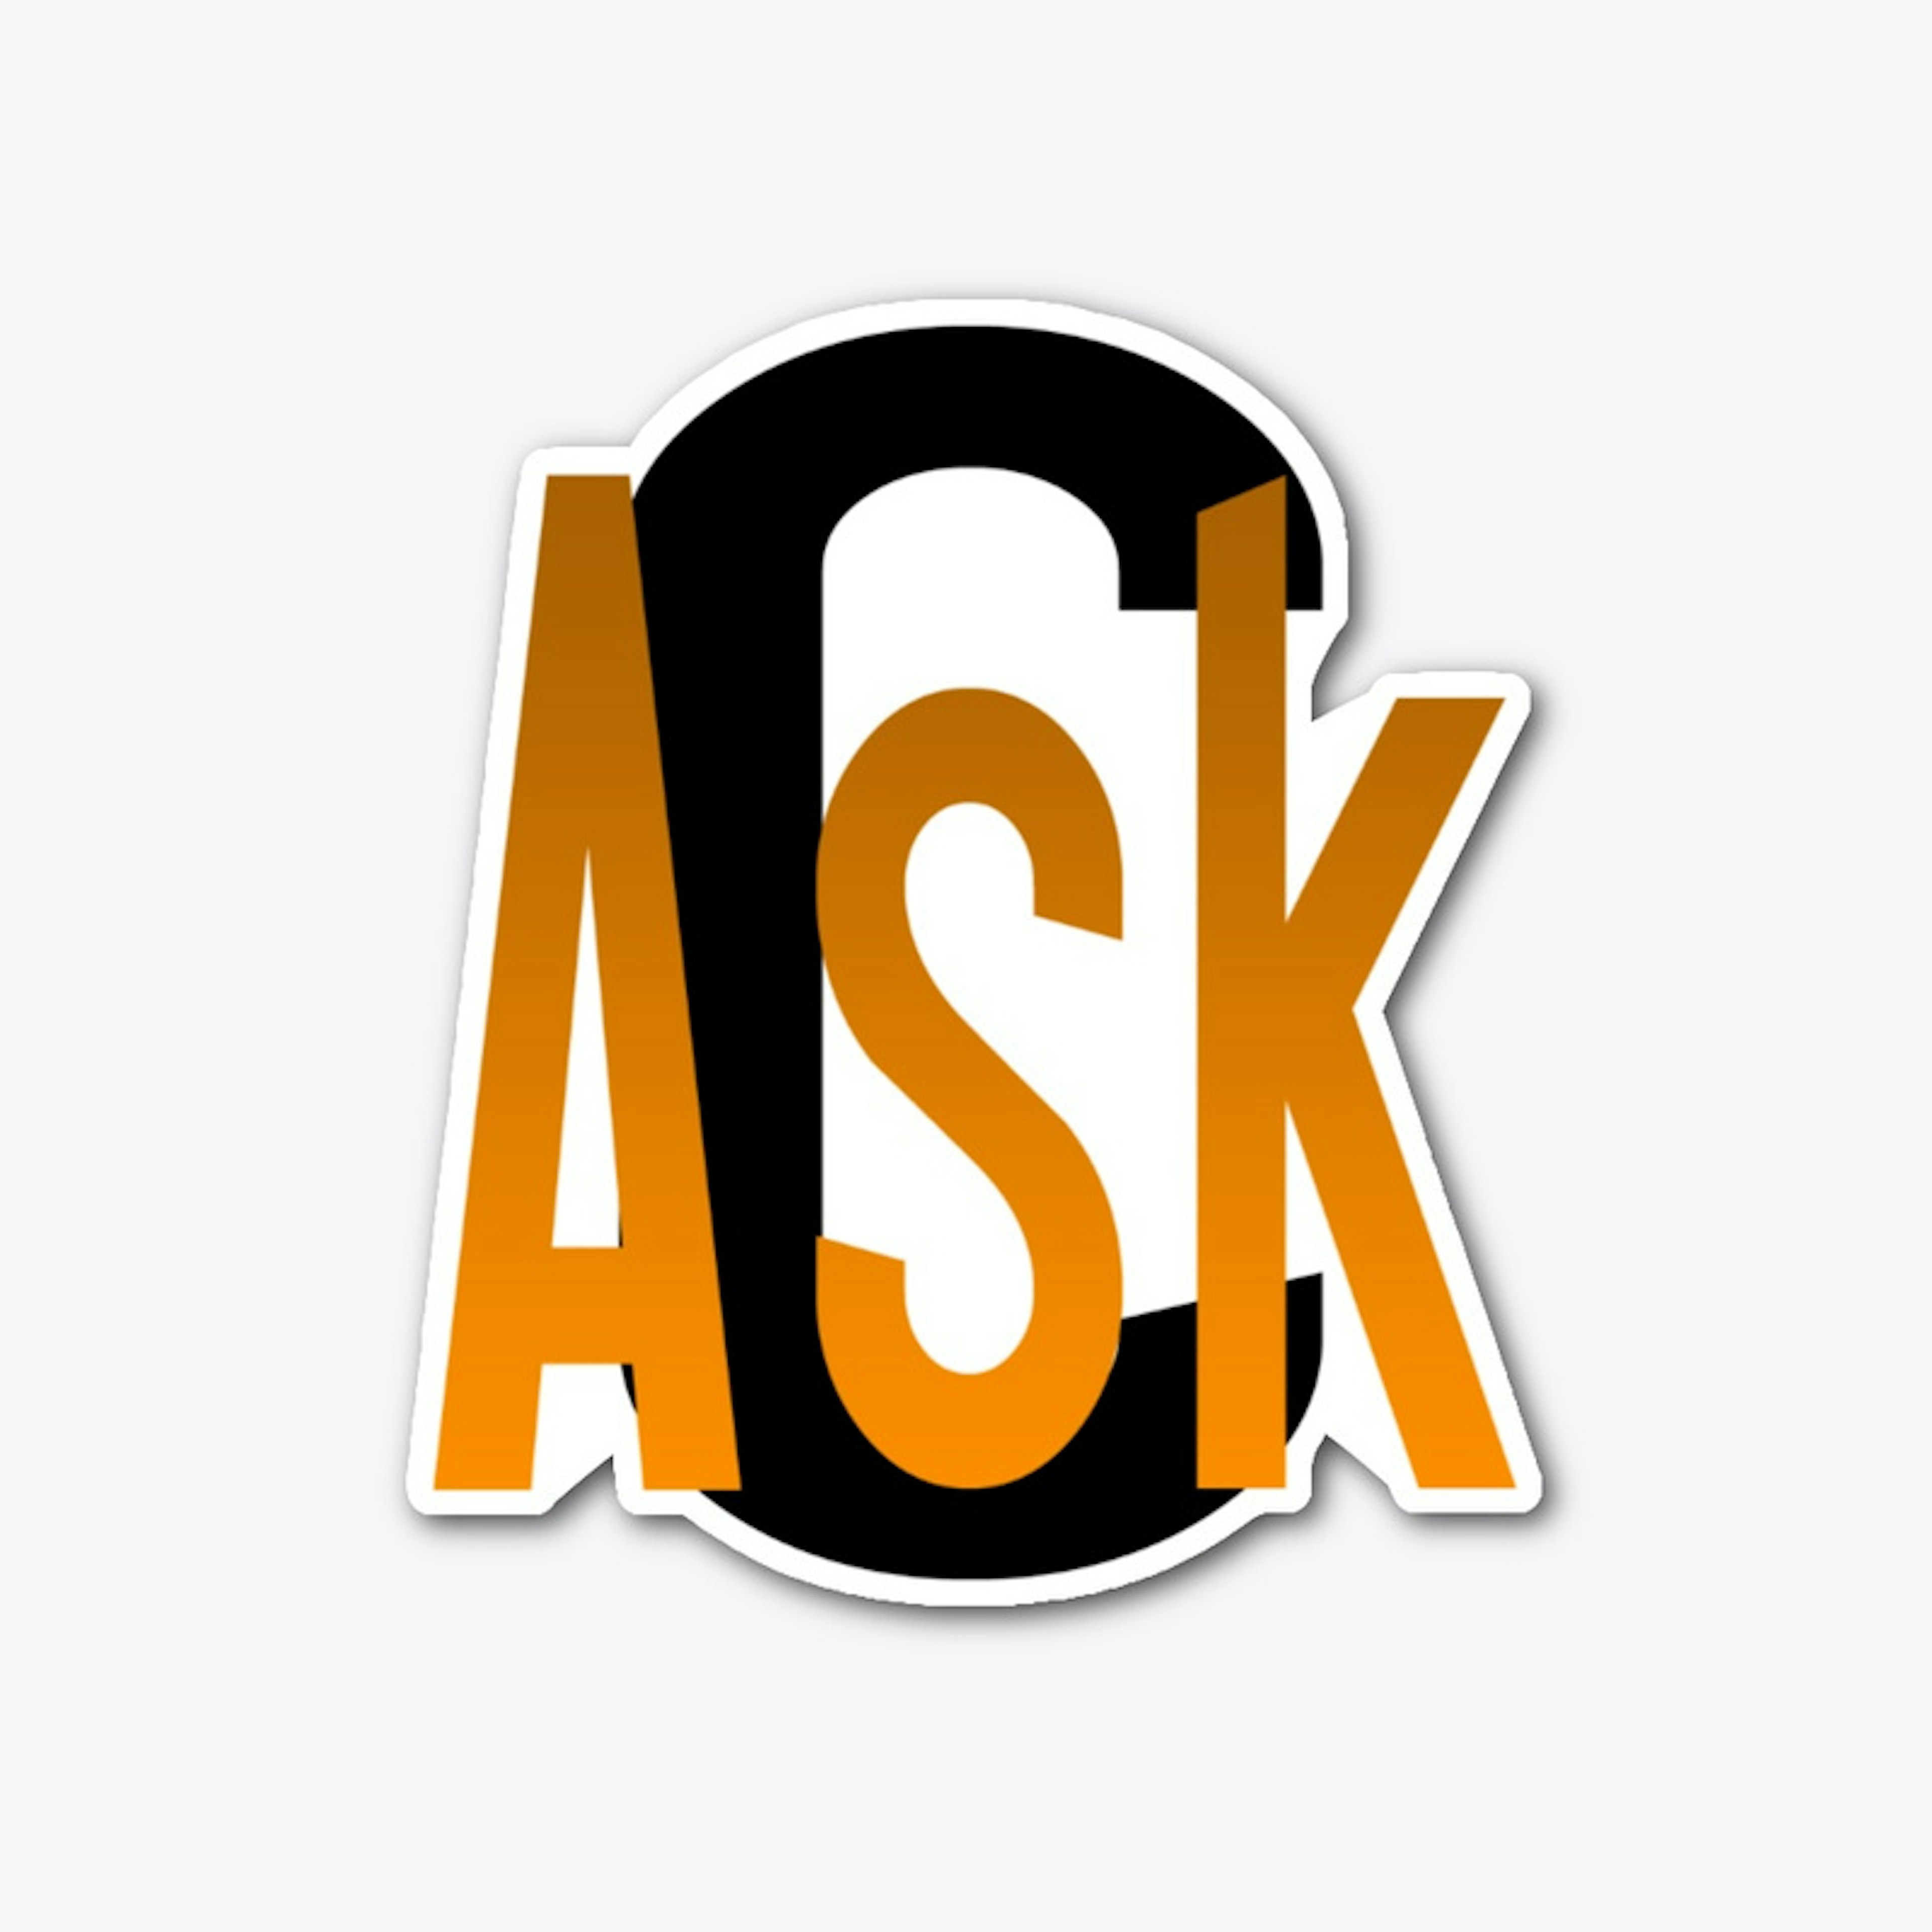 AskChristianT Logo Oficial Para Fans